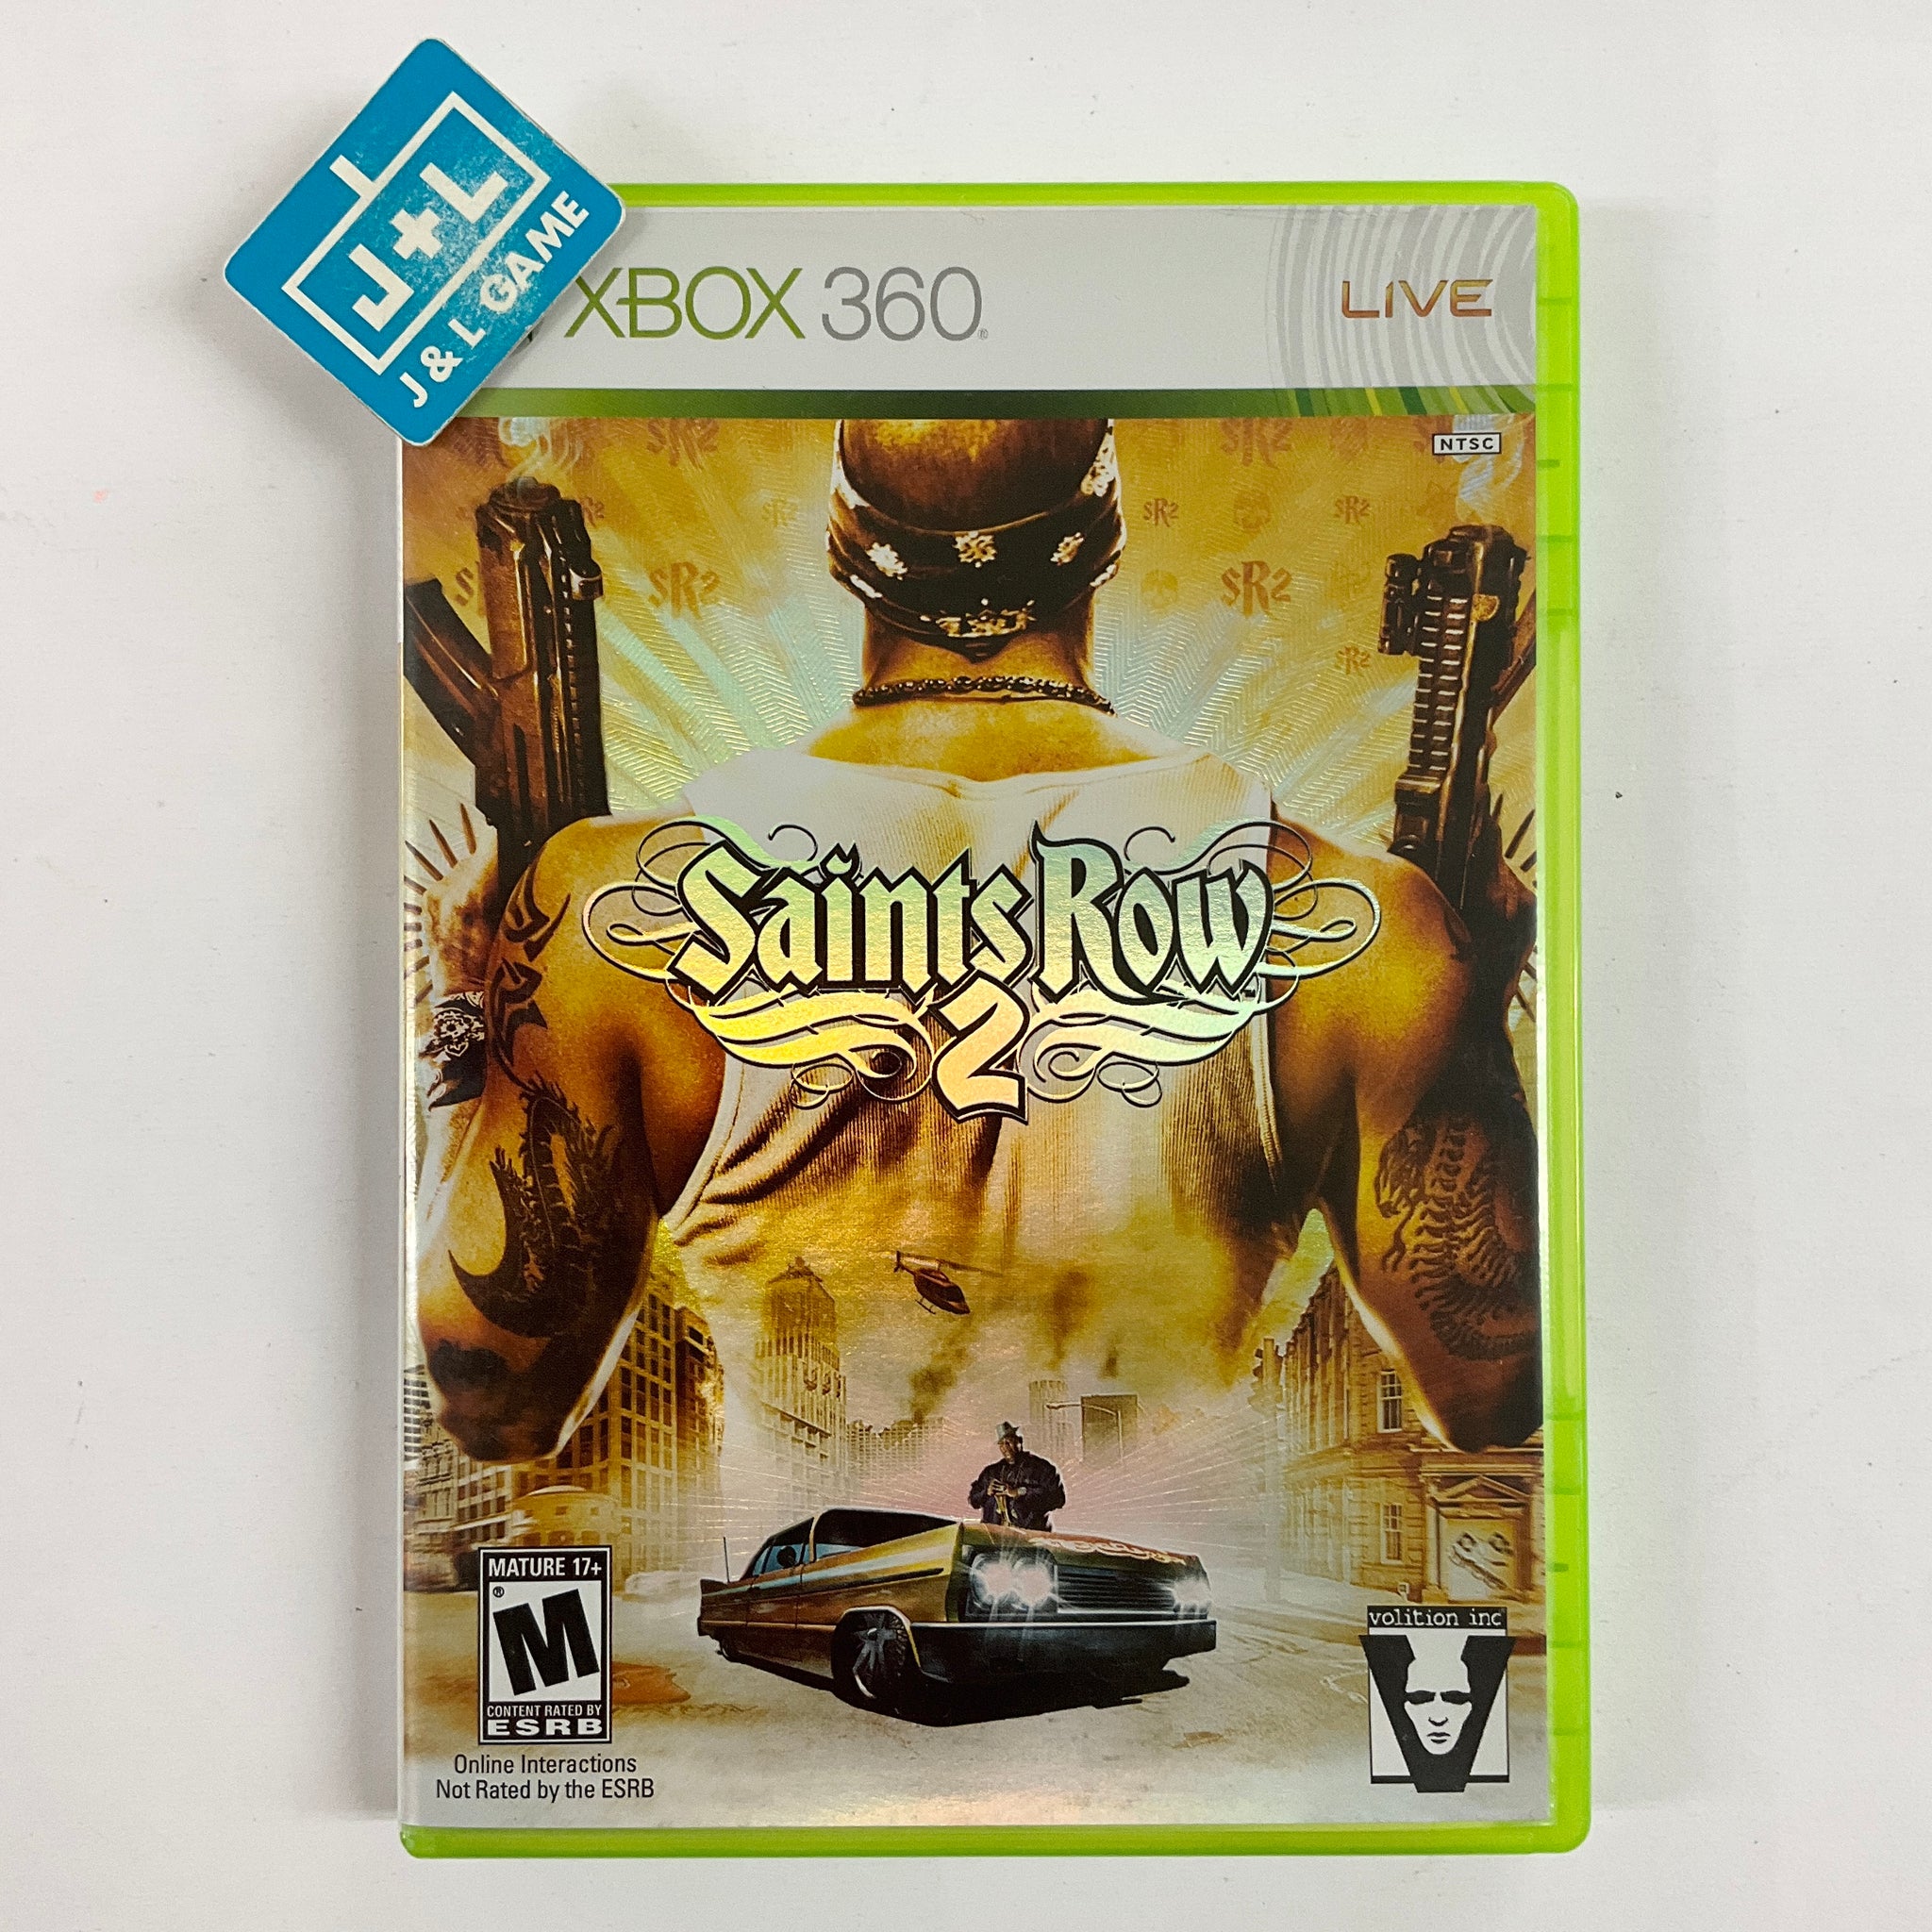 Microsoft Xbox 360 Live Platinum Hits Saints Row 2 Video Game